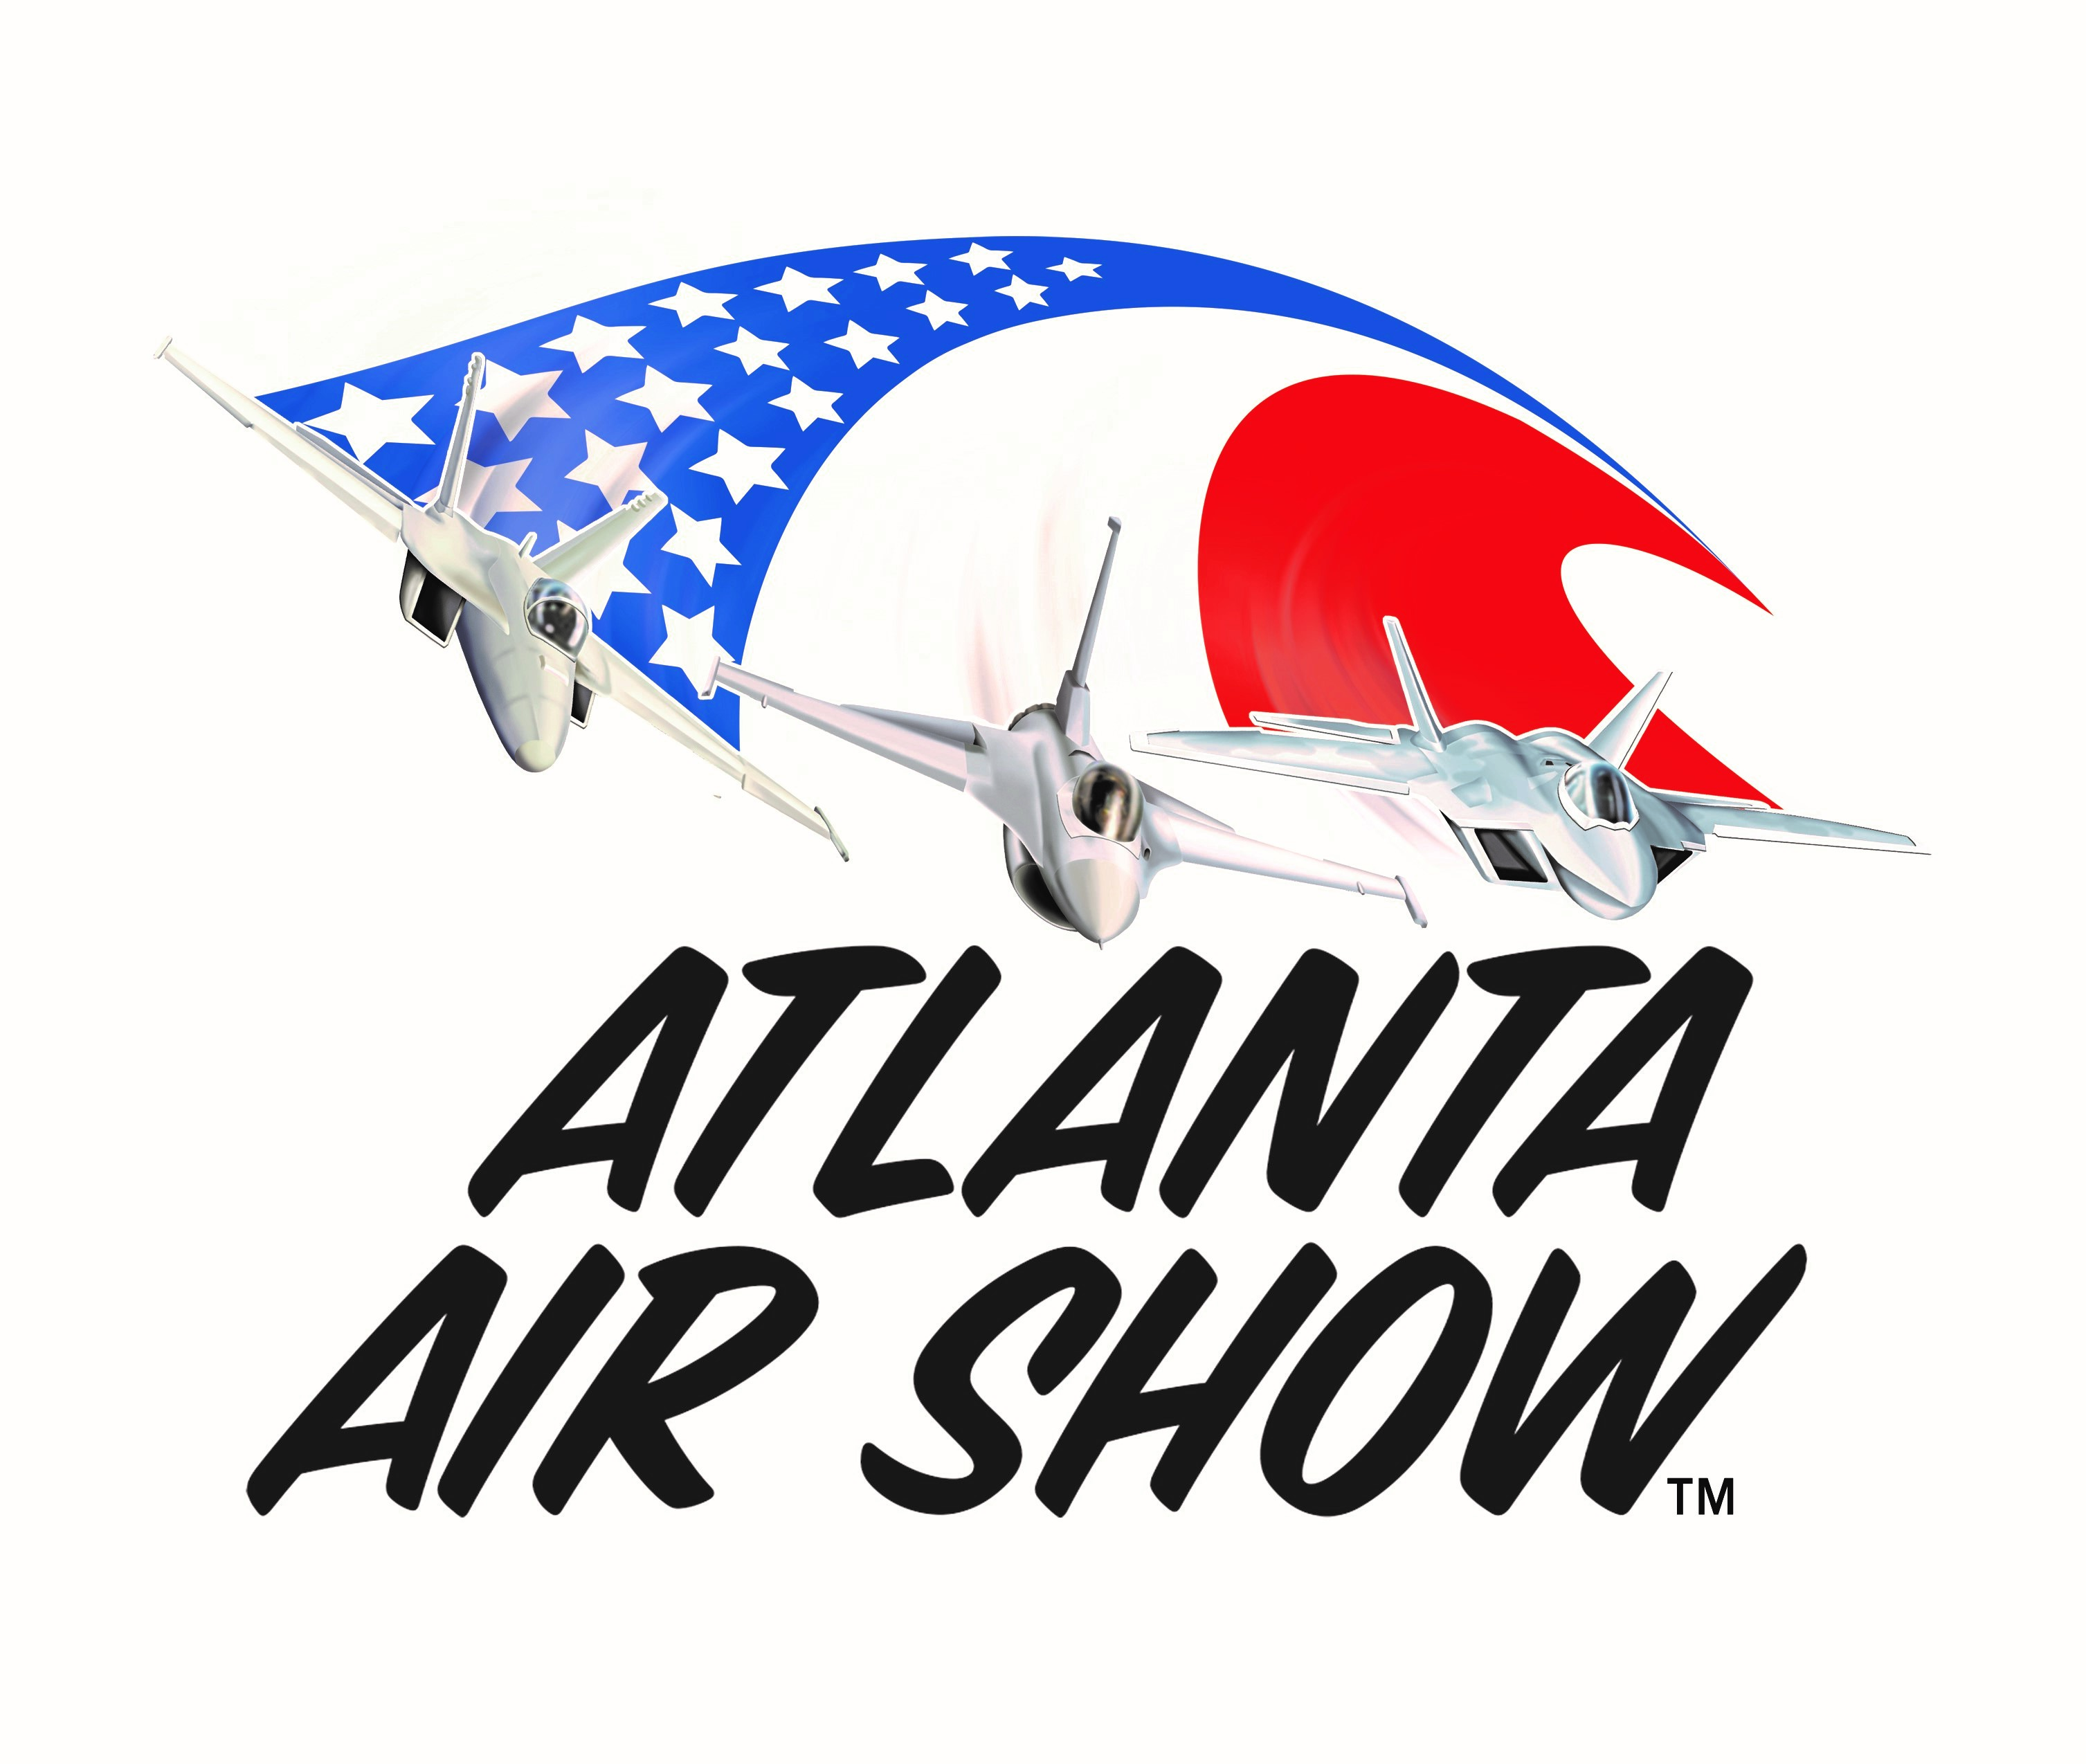 Atlanta Air Show Scheduled for October 1415 at Atlanta Motor Speedway